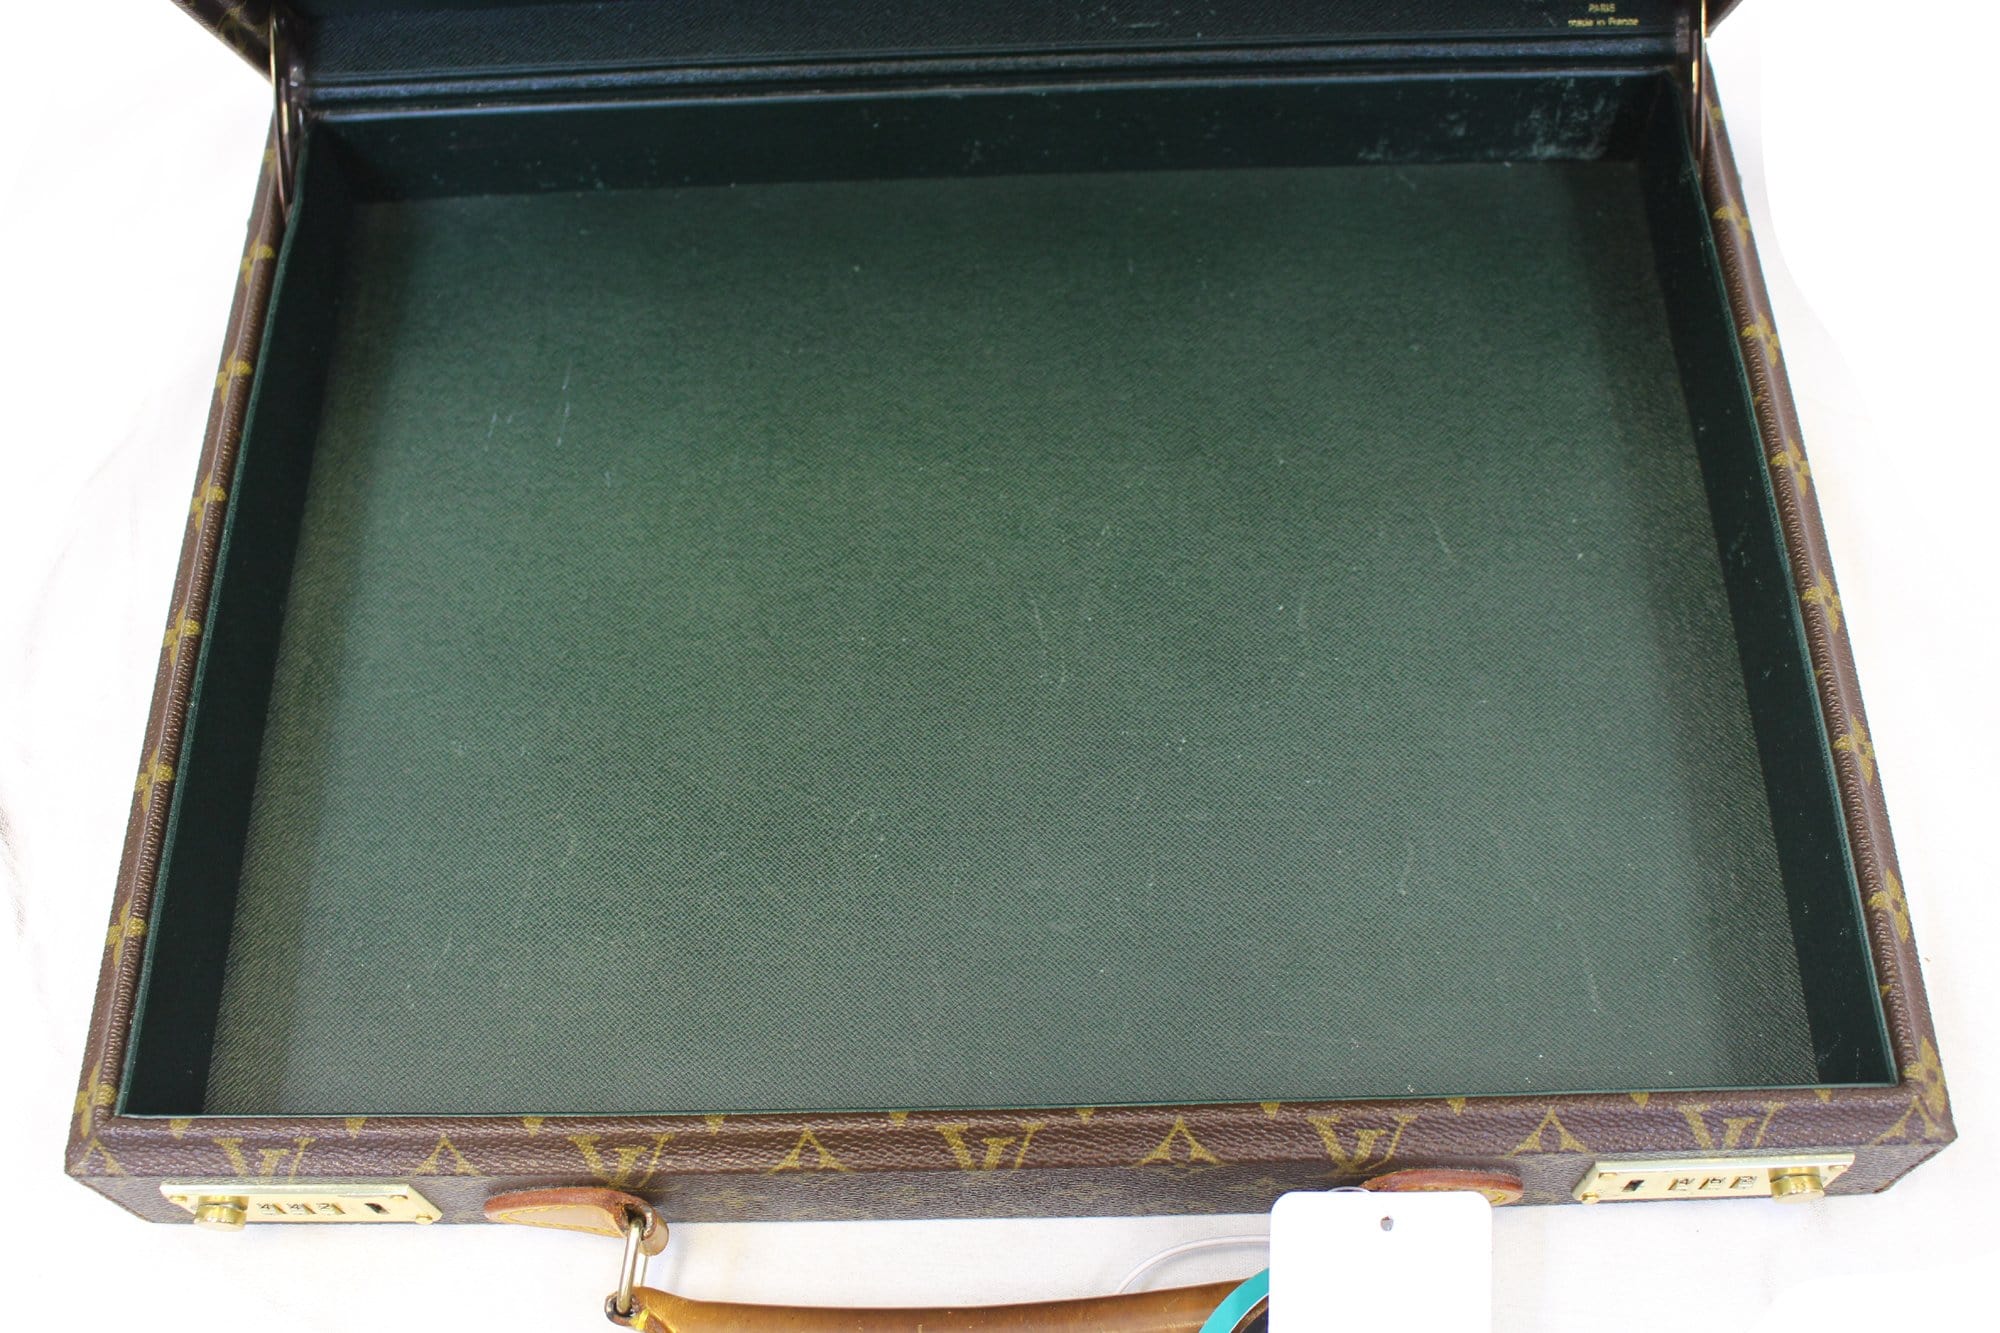 LOUIS VUITTON 'Président' briefcase in brown monogram canvas and